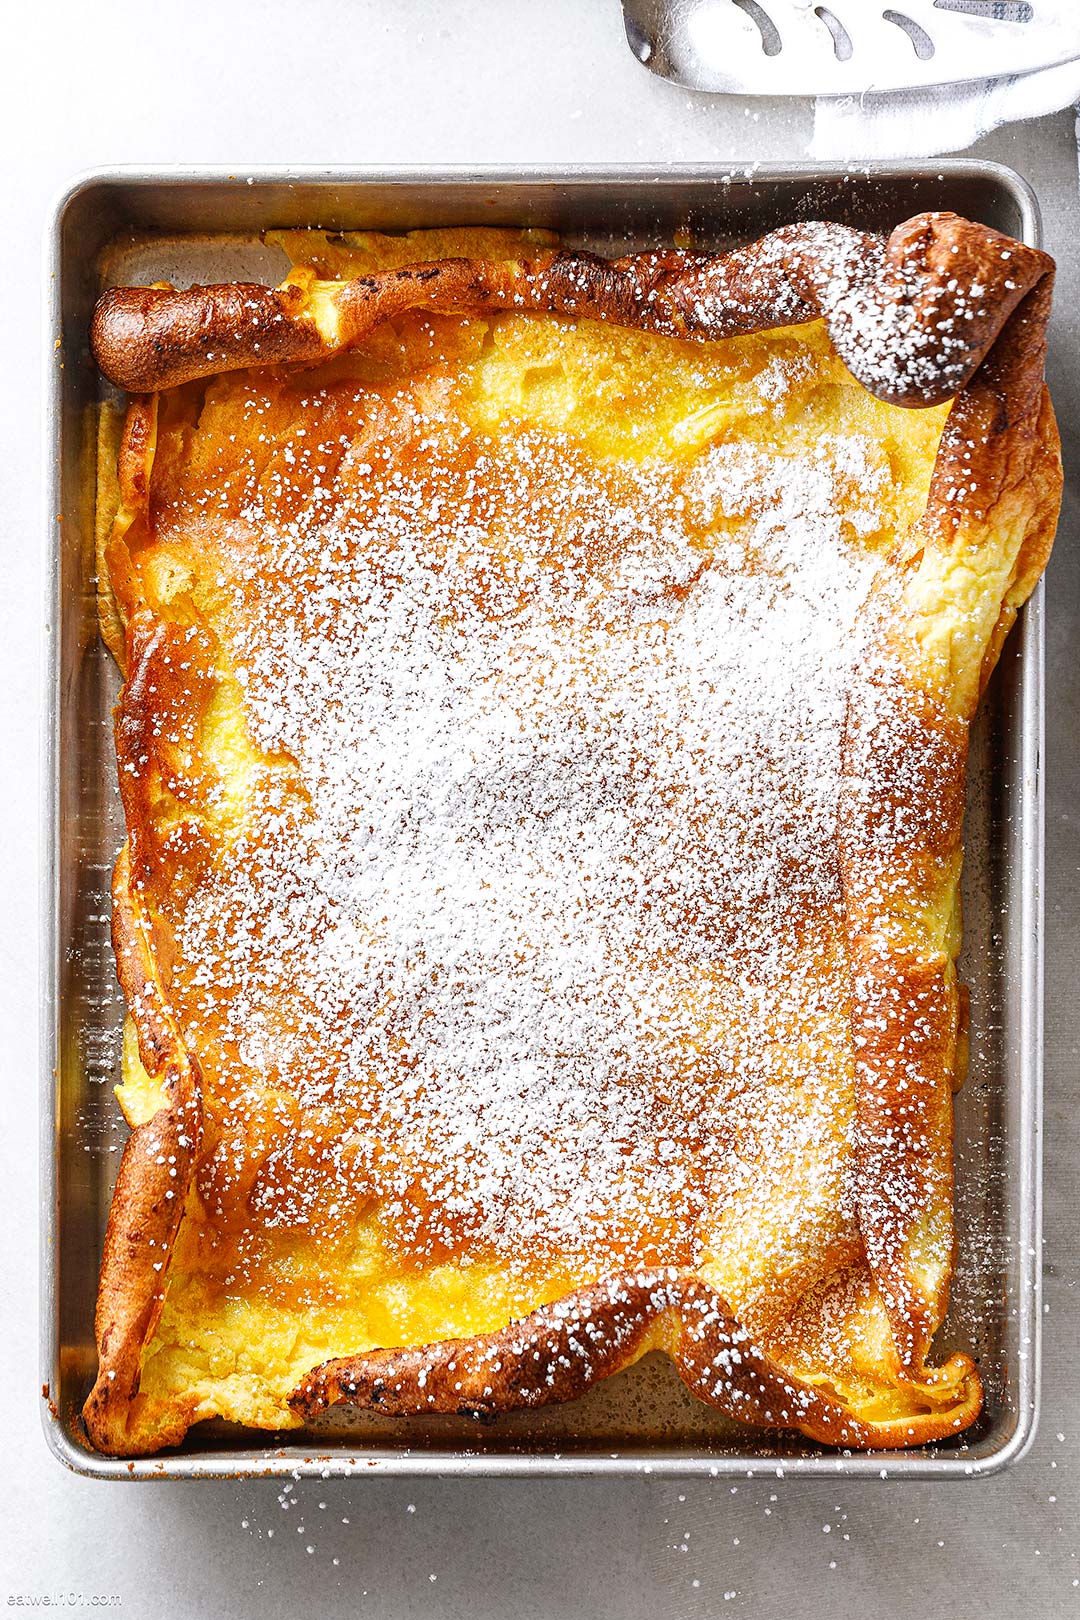 https://www.eatwell101.com/wp-content/uploads/2022/09/oven-baked-pancake-photos.jpg